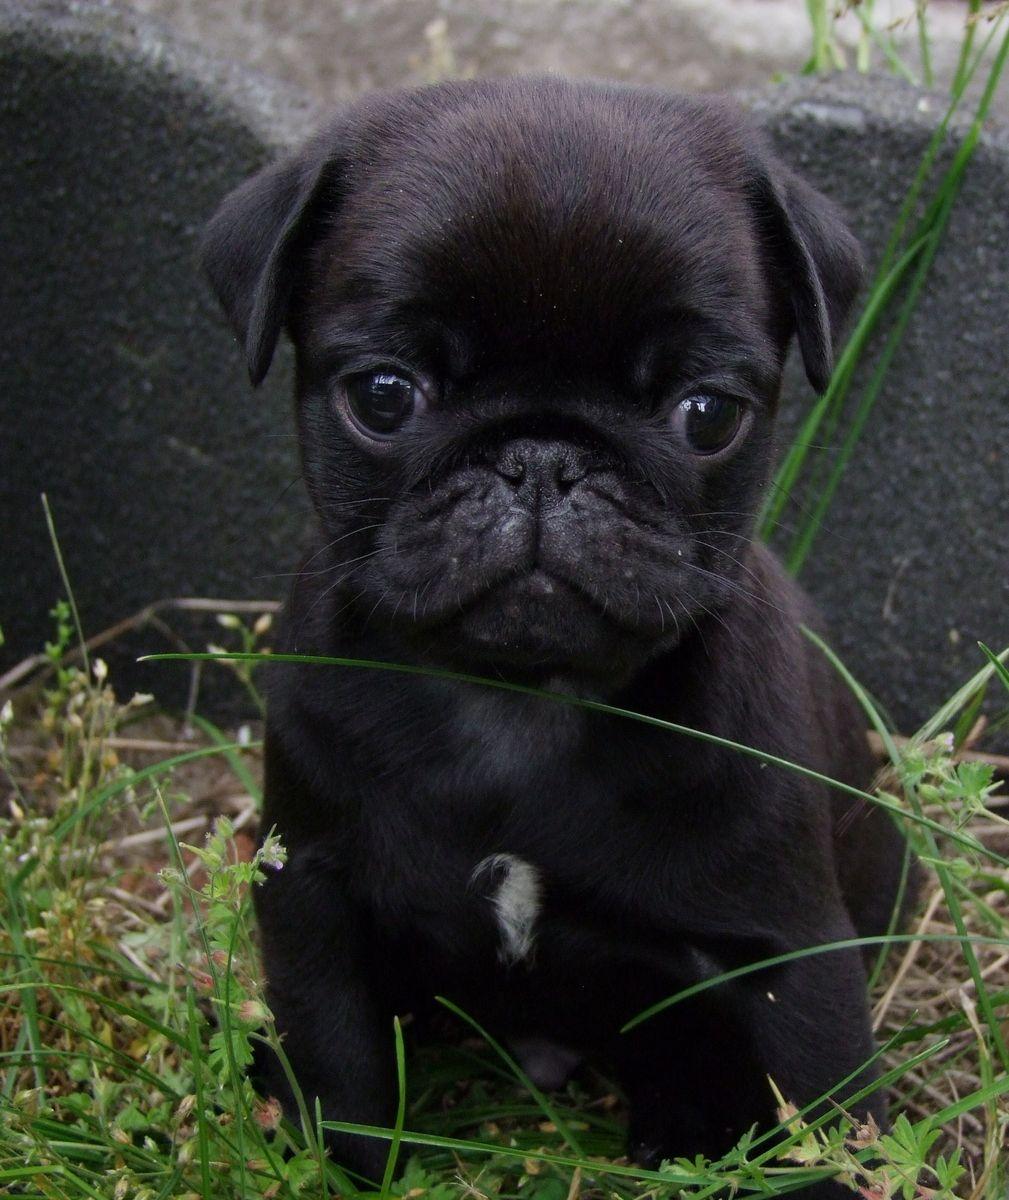 Cute Black Pug Puppy. DOGS. Black pug puppies, Baby pugs, Pugs